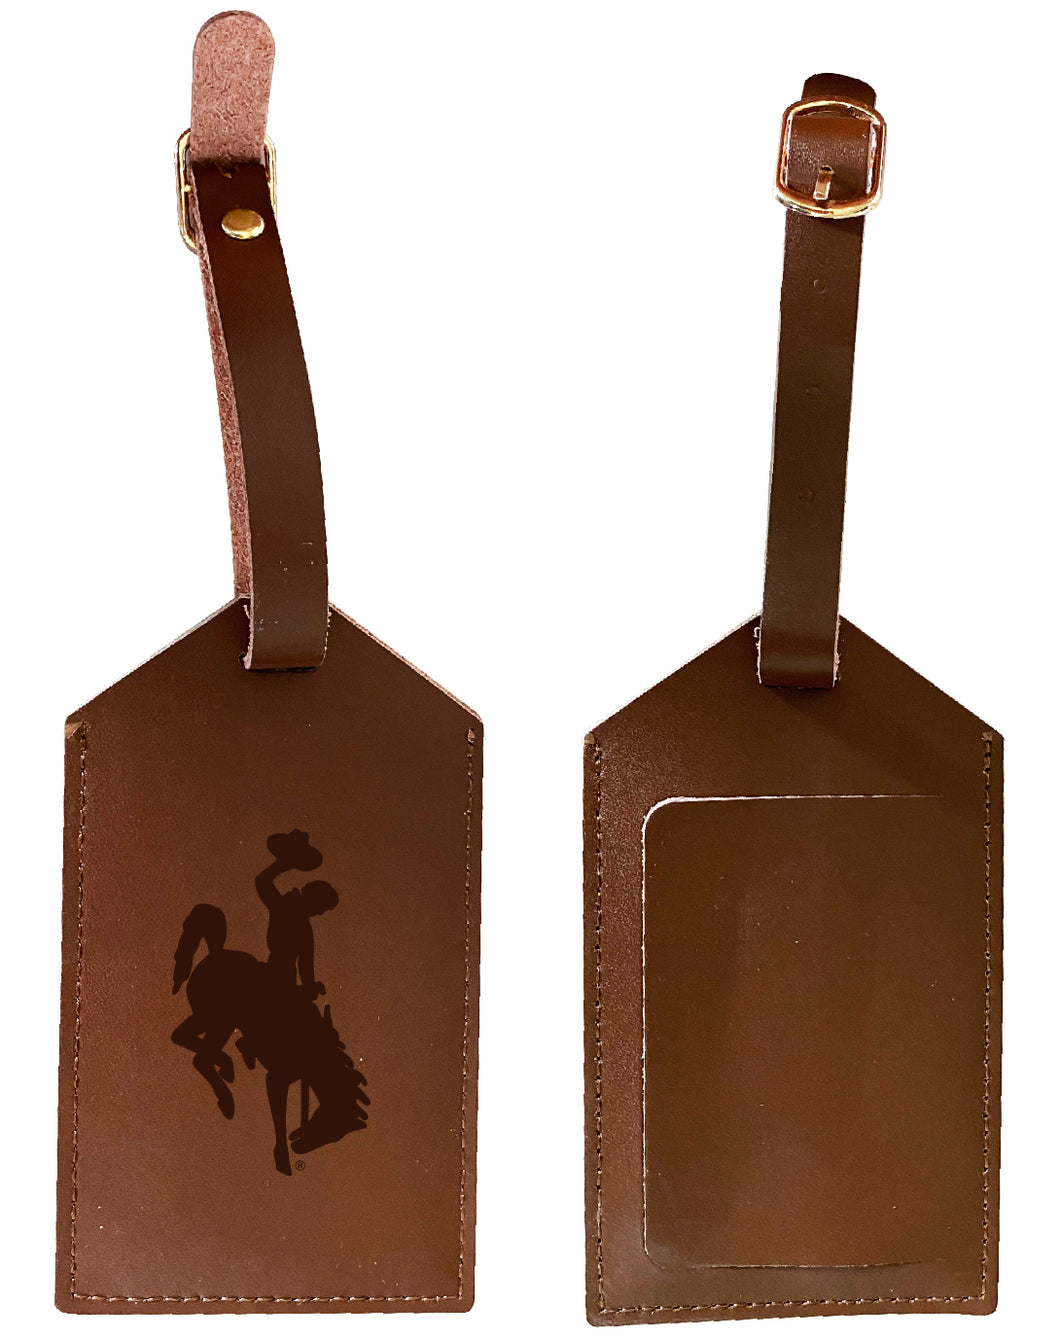 University of Wyoming Leather Luggage Tag Engraved